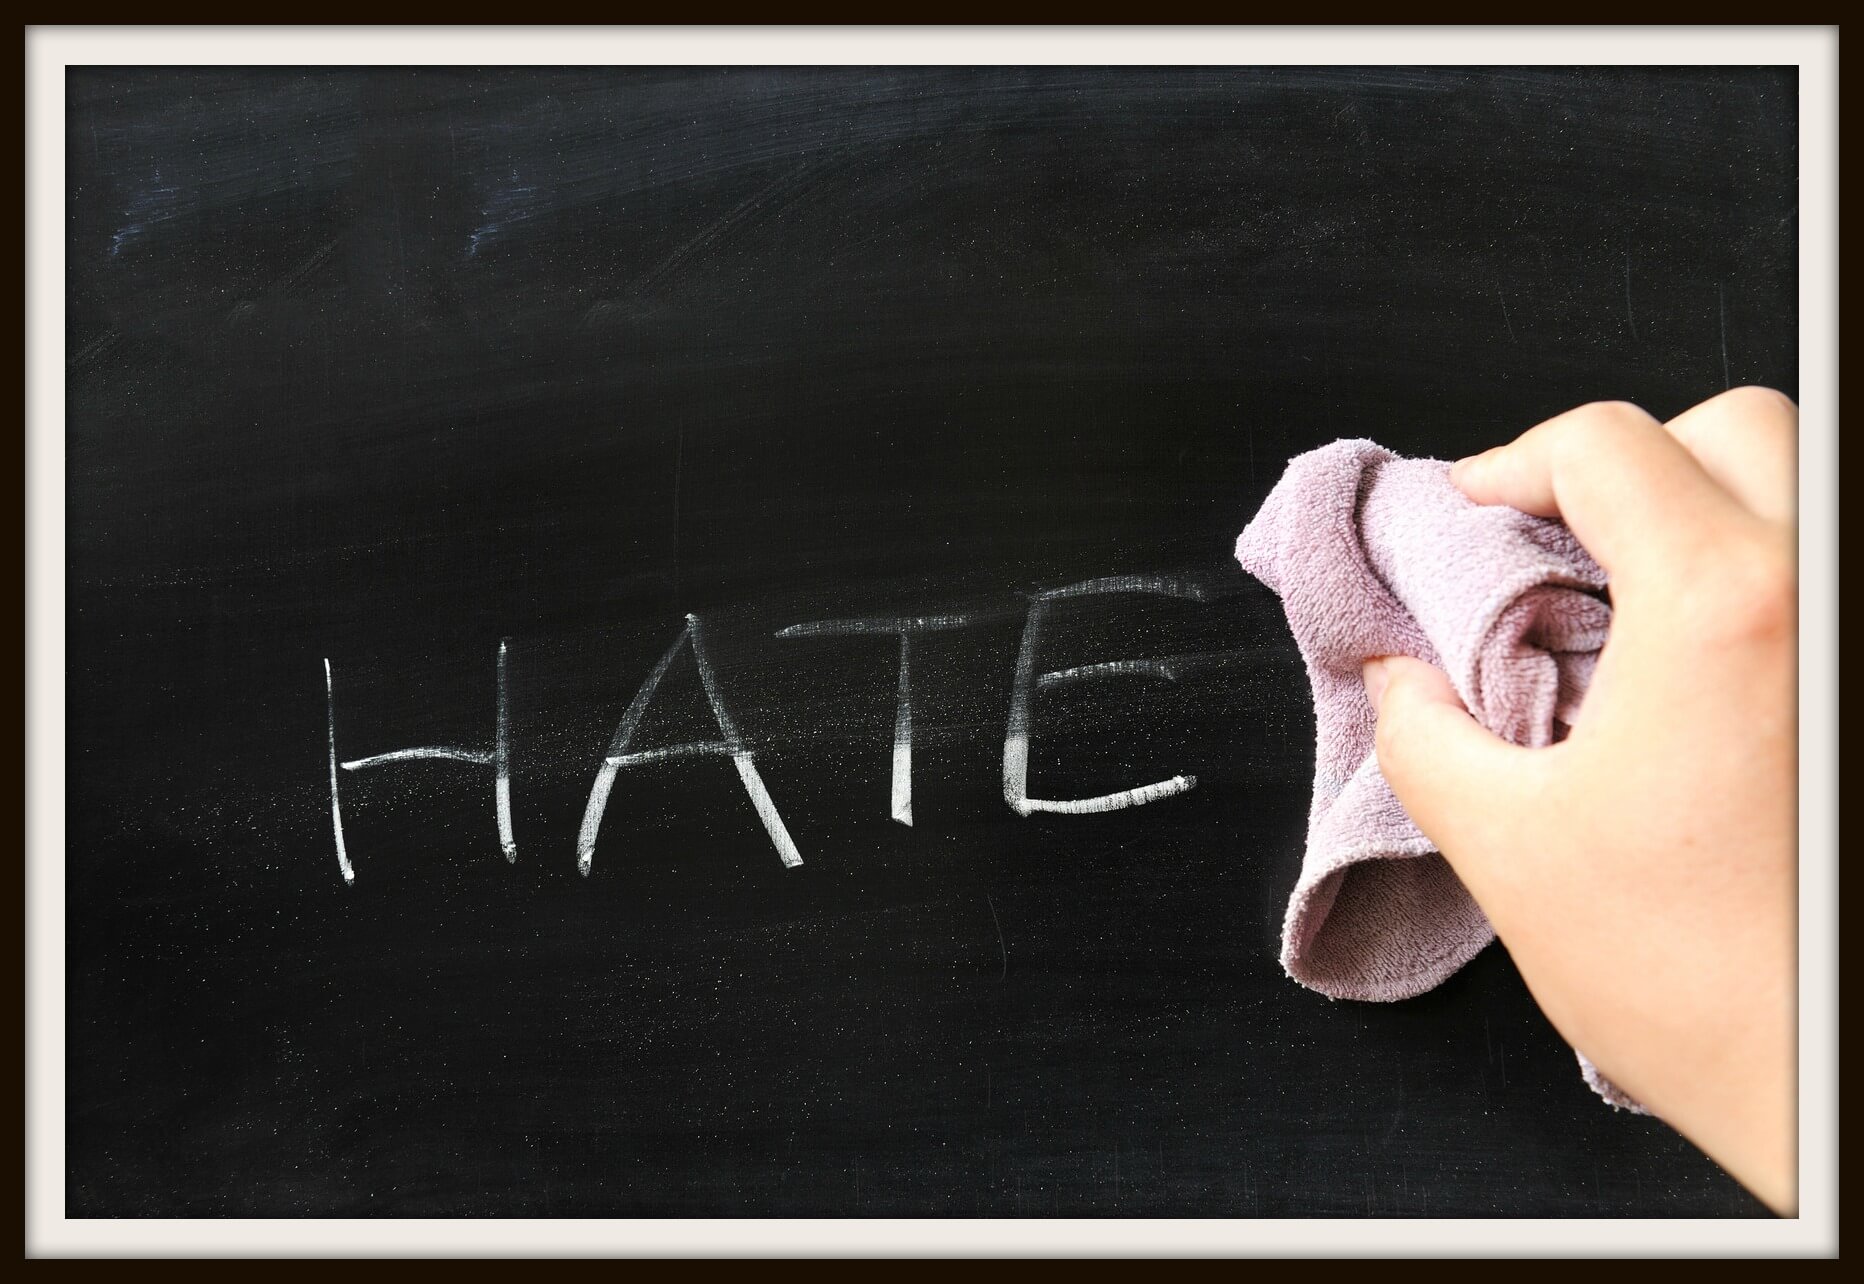 Ask Rene: How Can I Halt The Hate?